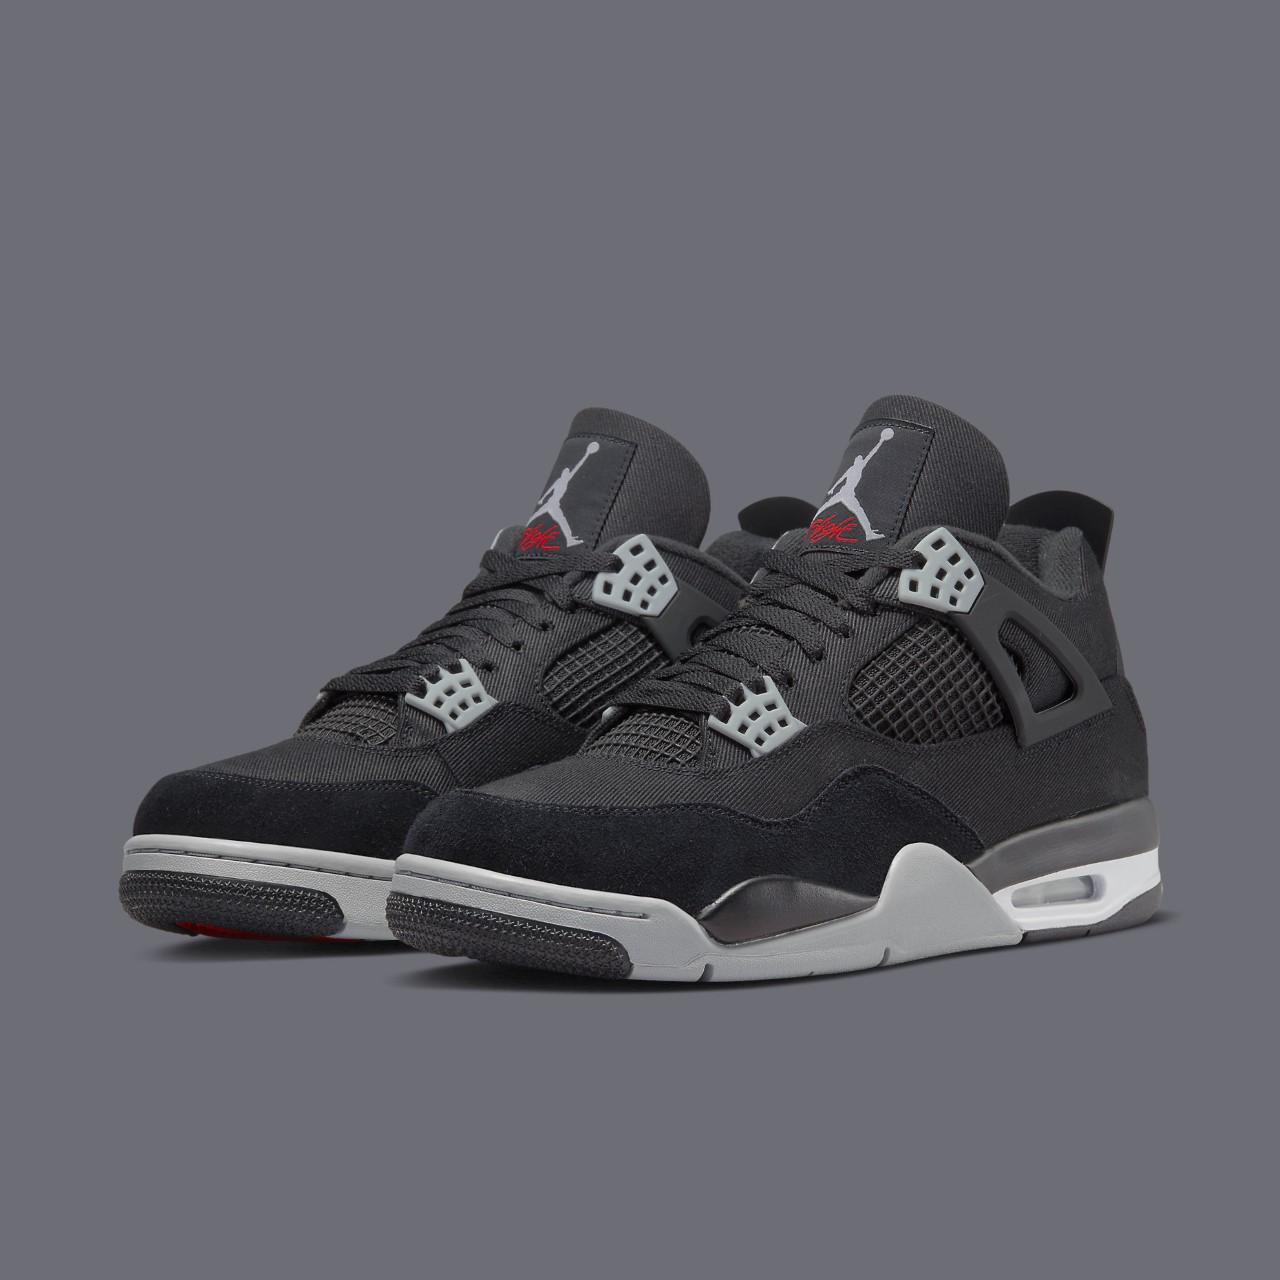 Air Jordan 4 Retro “Black Canvas” New Release Date